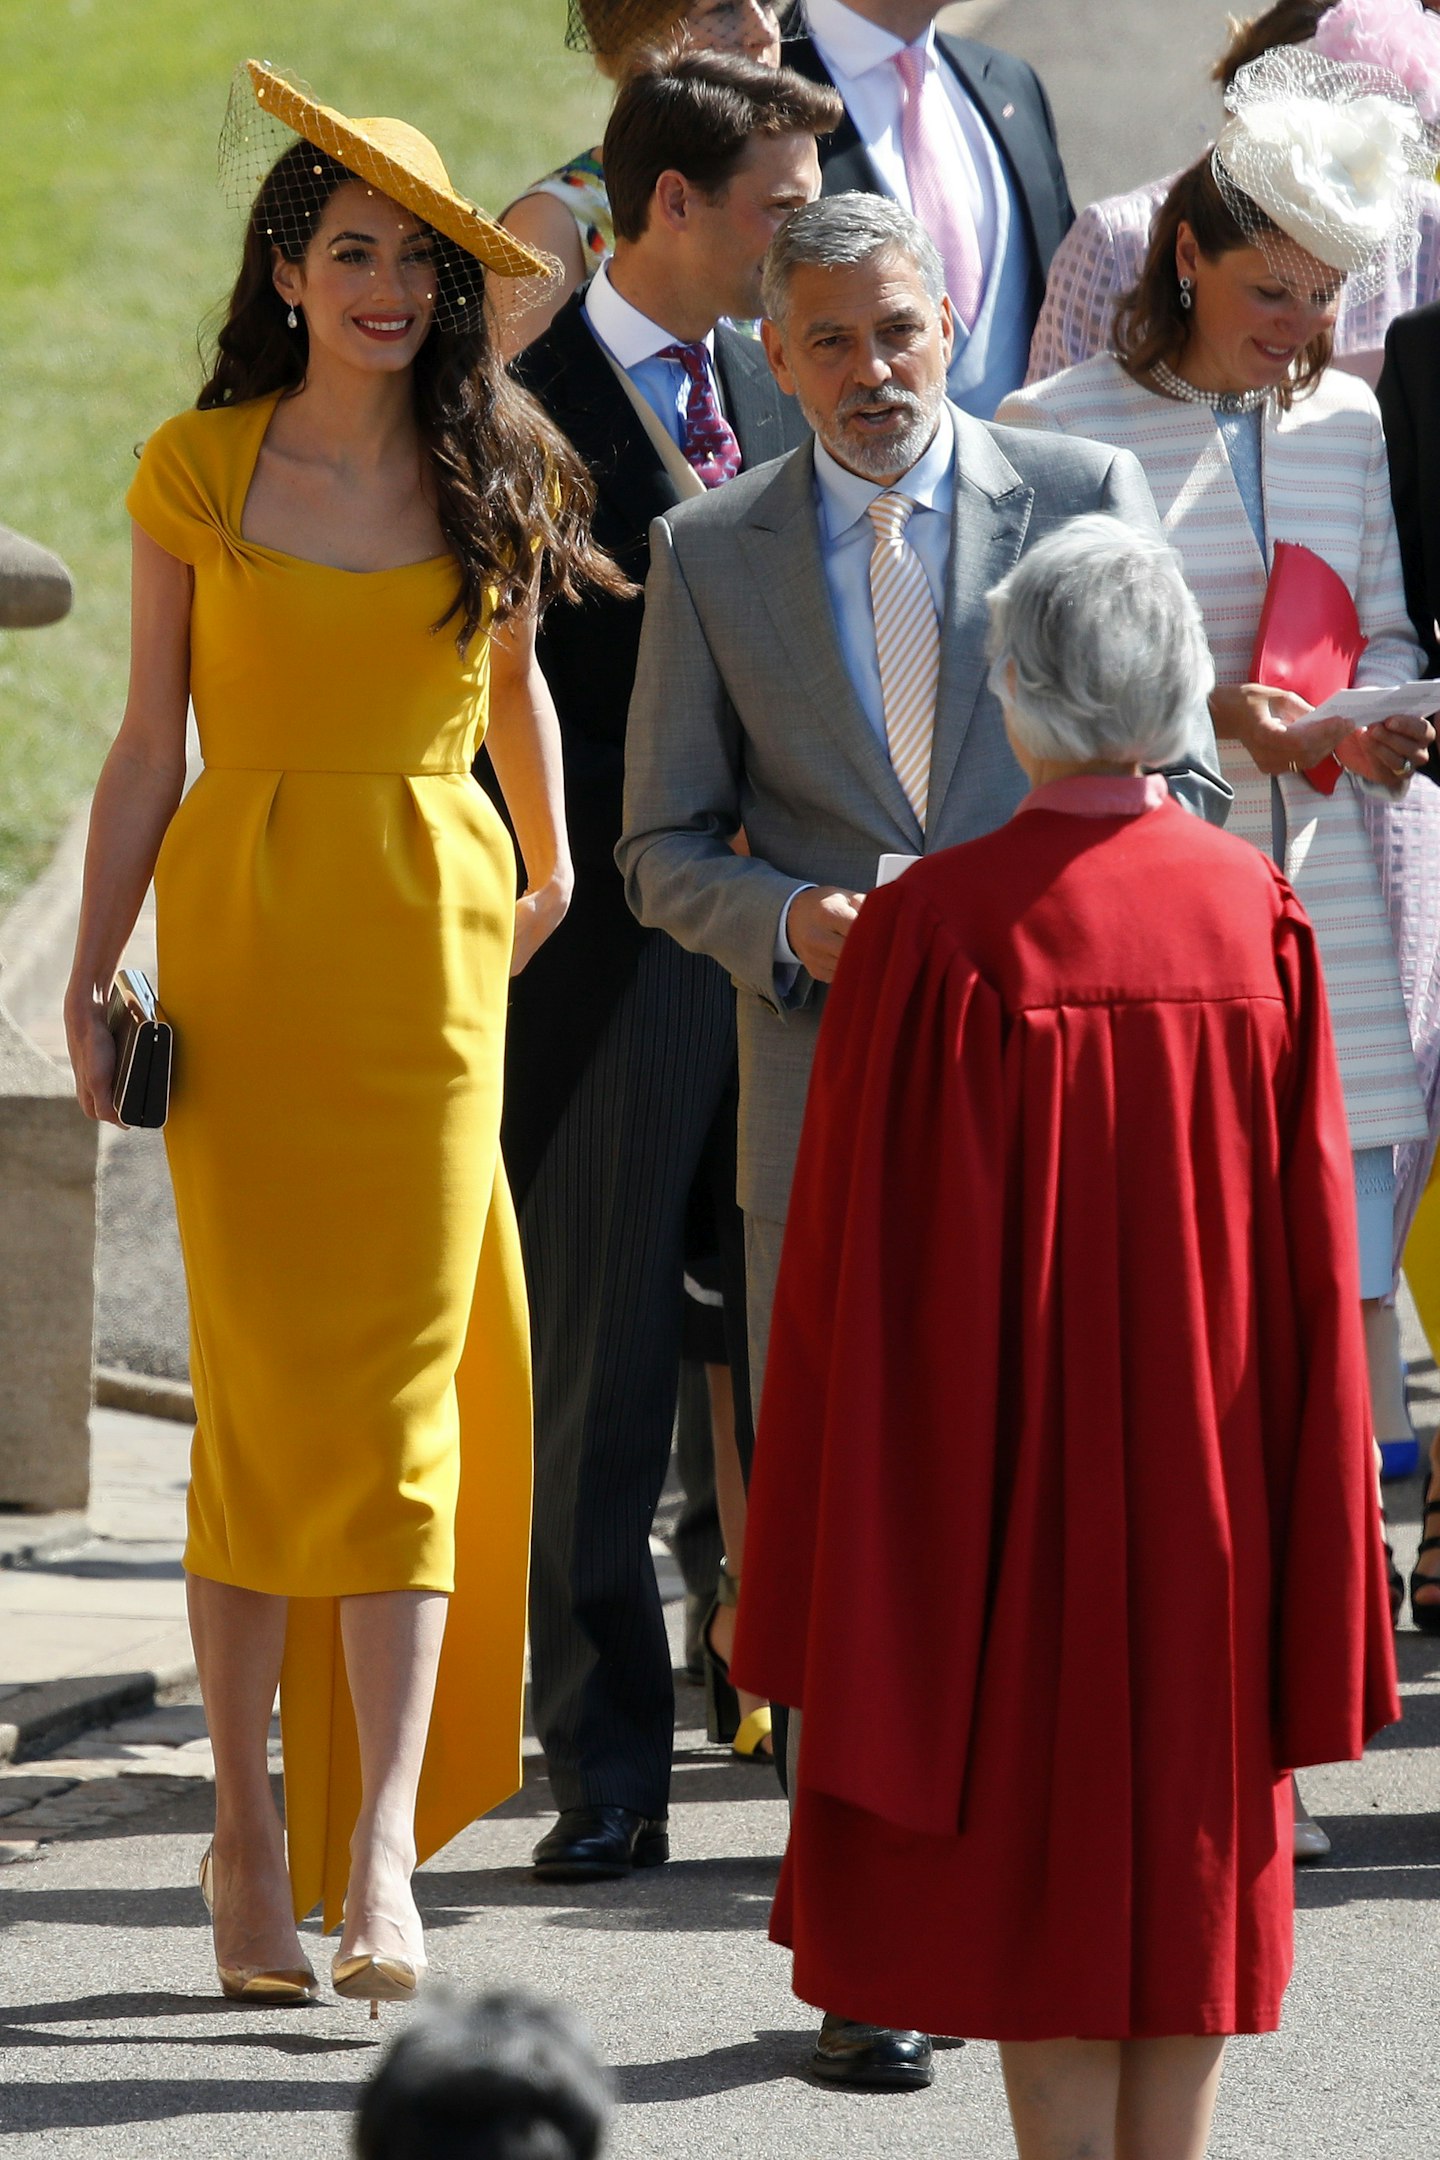 Prince Harry Meghan Markle Royal Wedding Guests